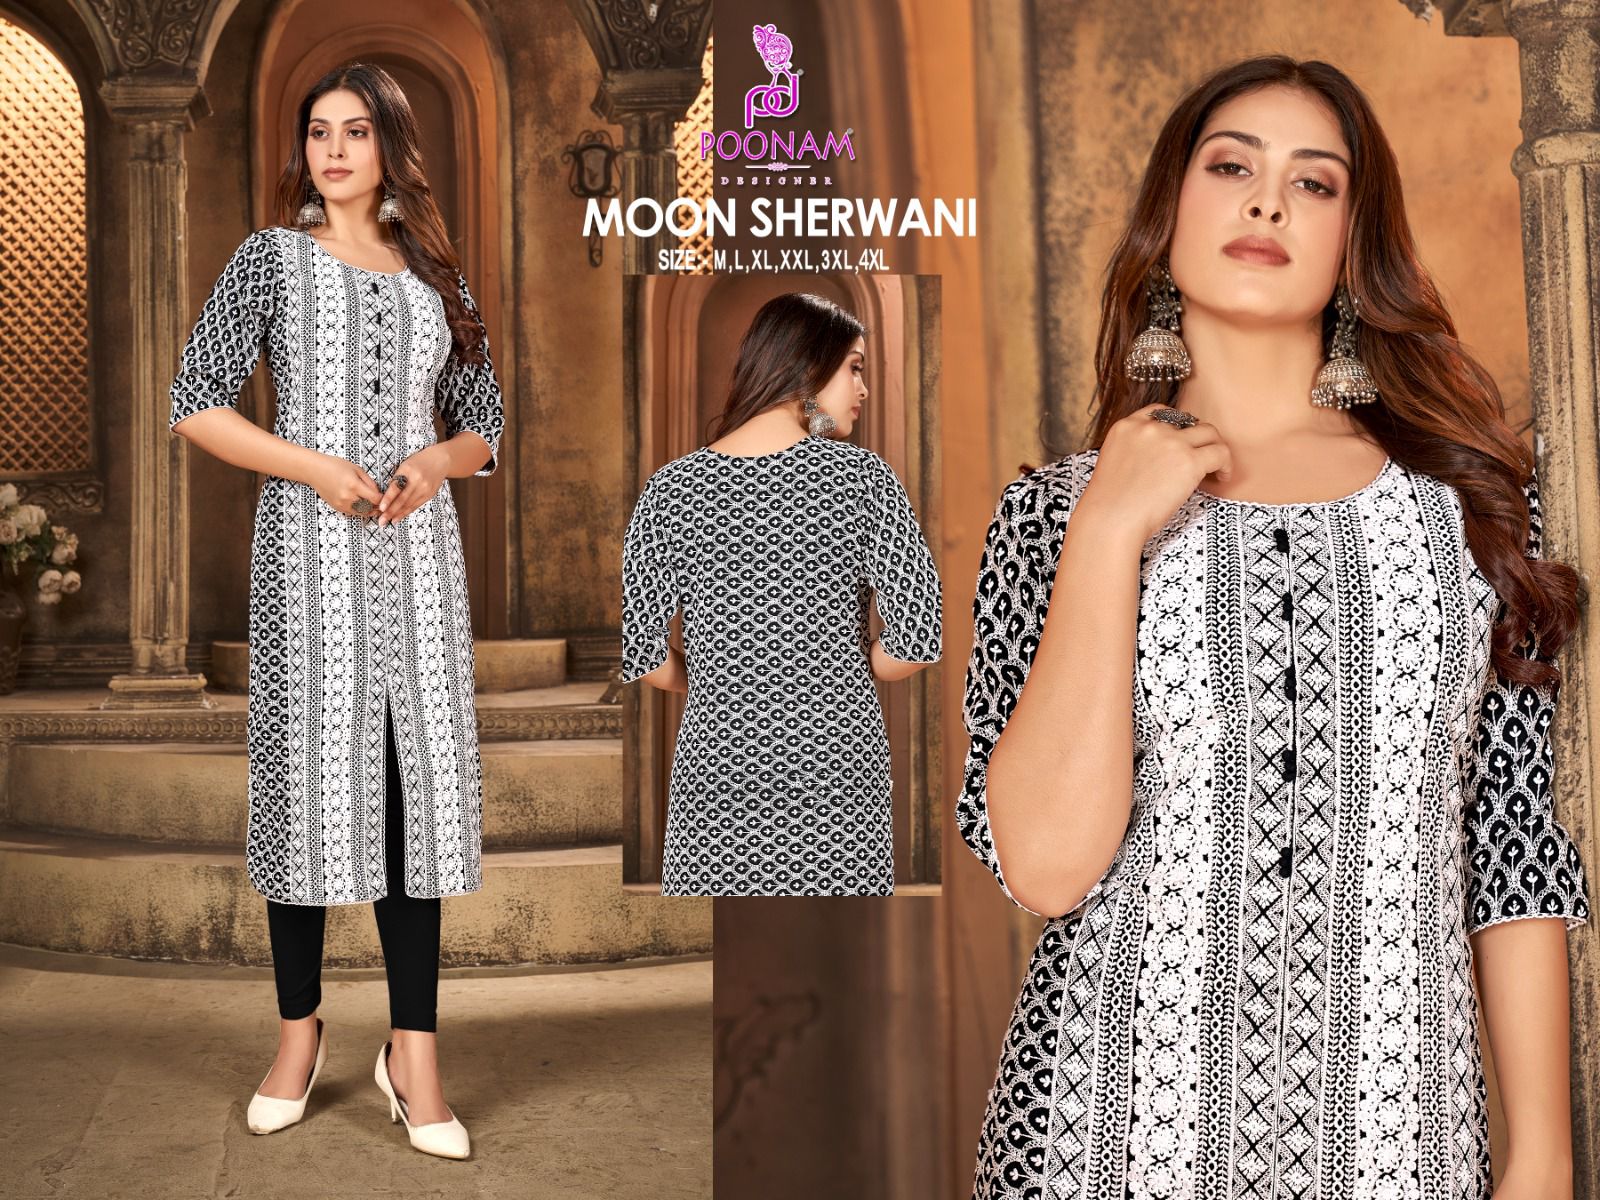 Poonam Designer Moon Sherwani 1006